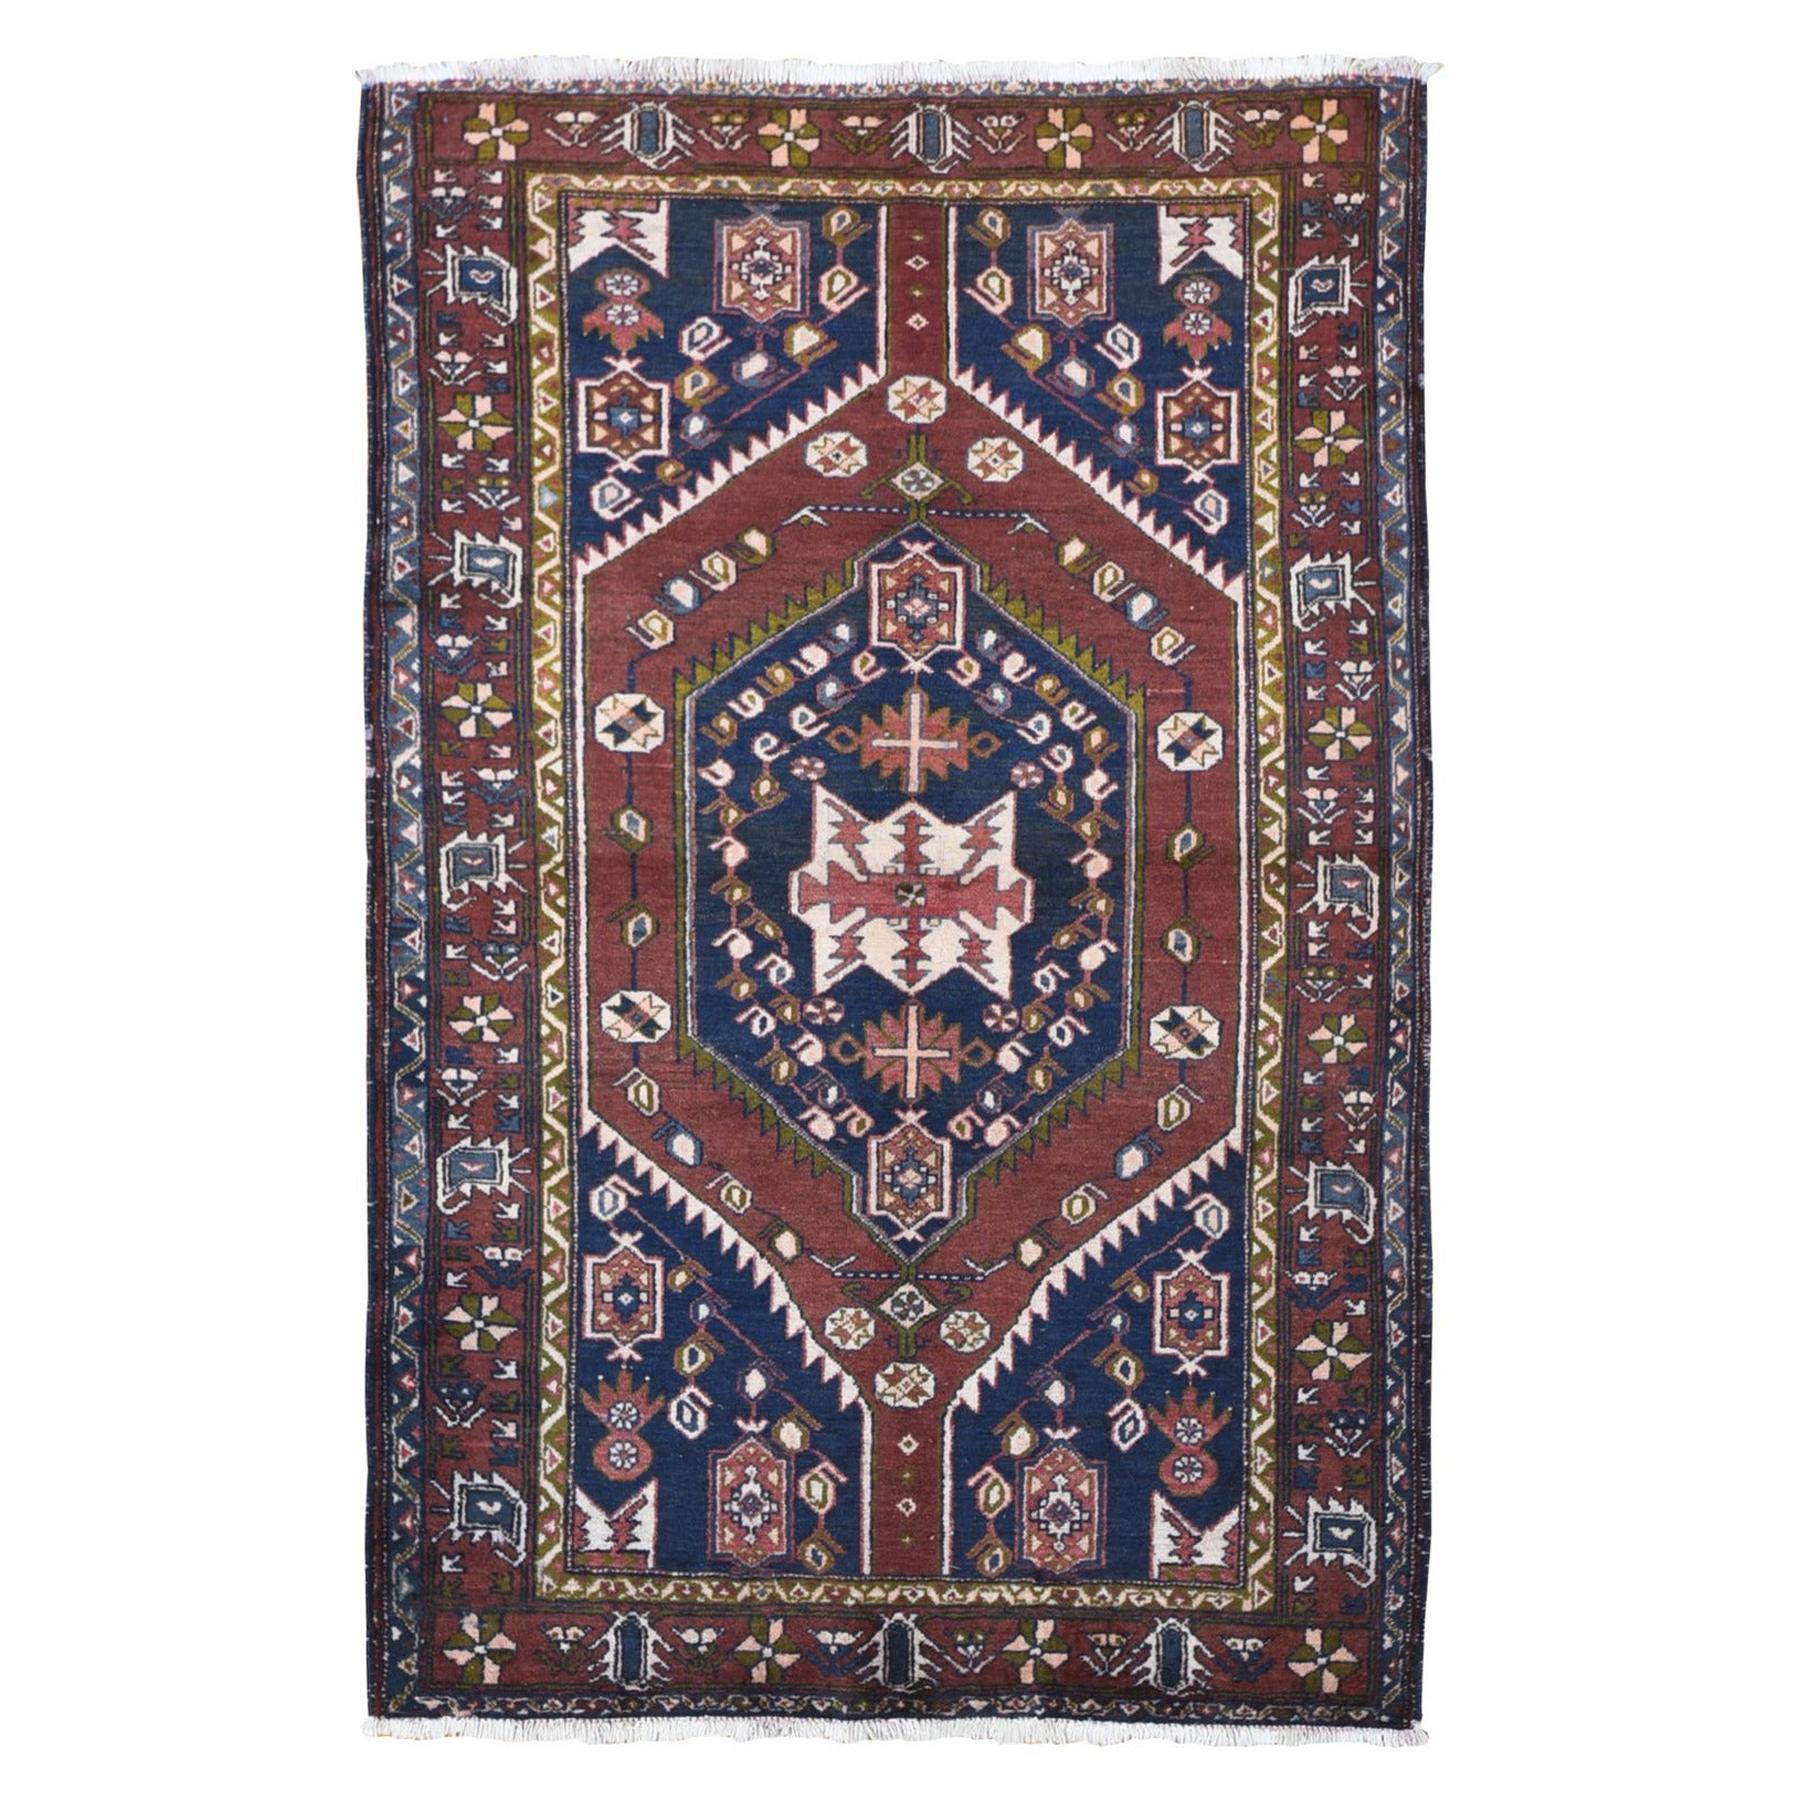 Vintage Persian Hamadan Brown Excellent Cond Tribal Weaving Wool Handknotted Rug